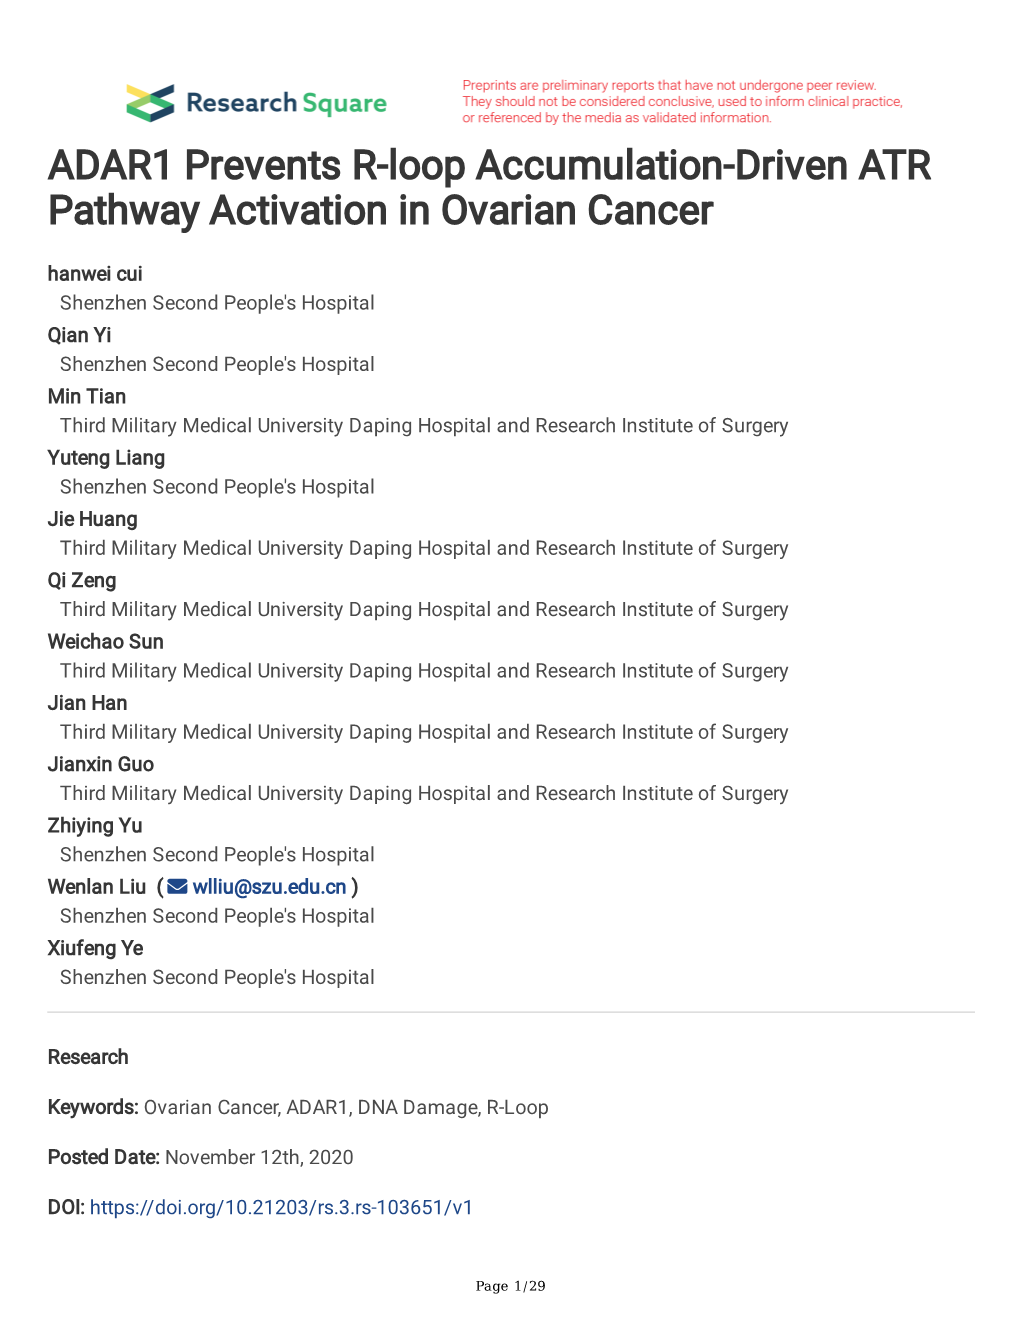 ADAR1 Prevents R-Loop Accumulation-Driven ATR Pathway Activation In